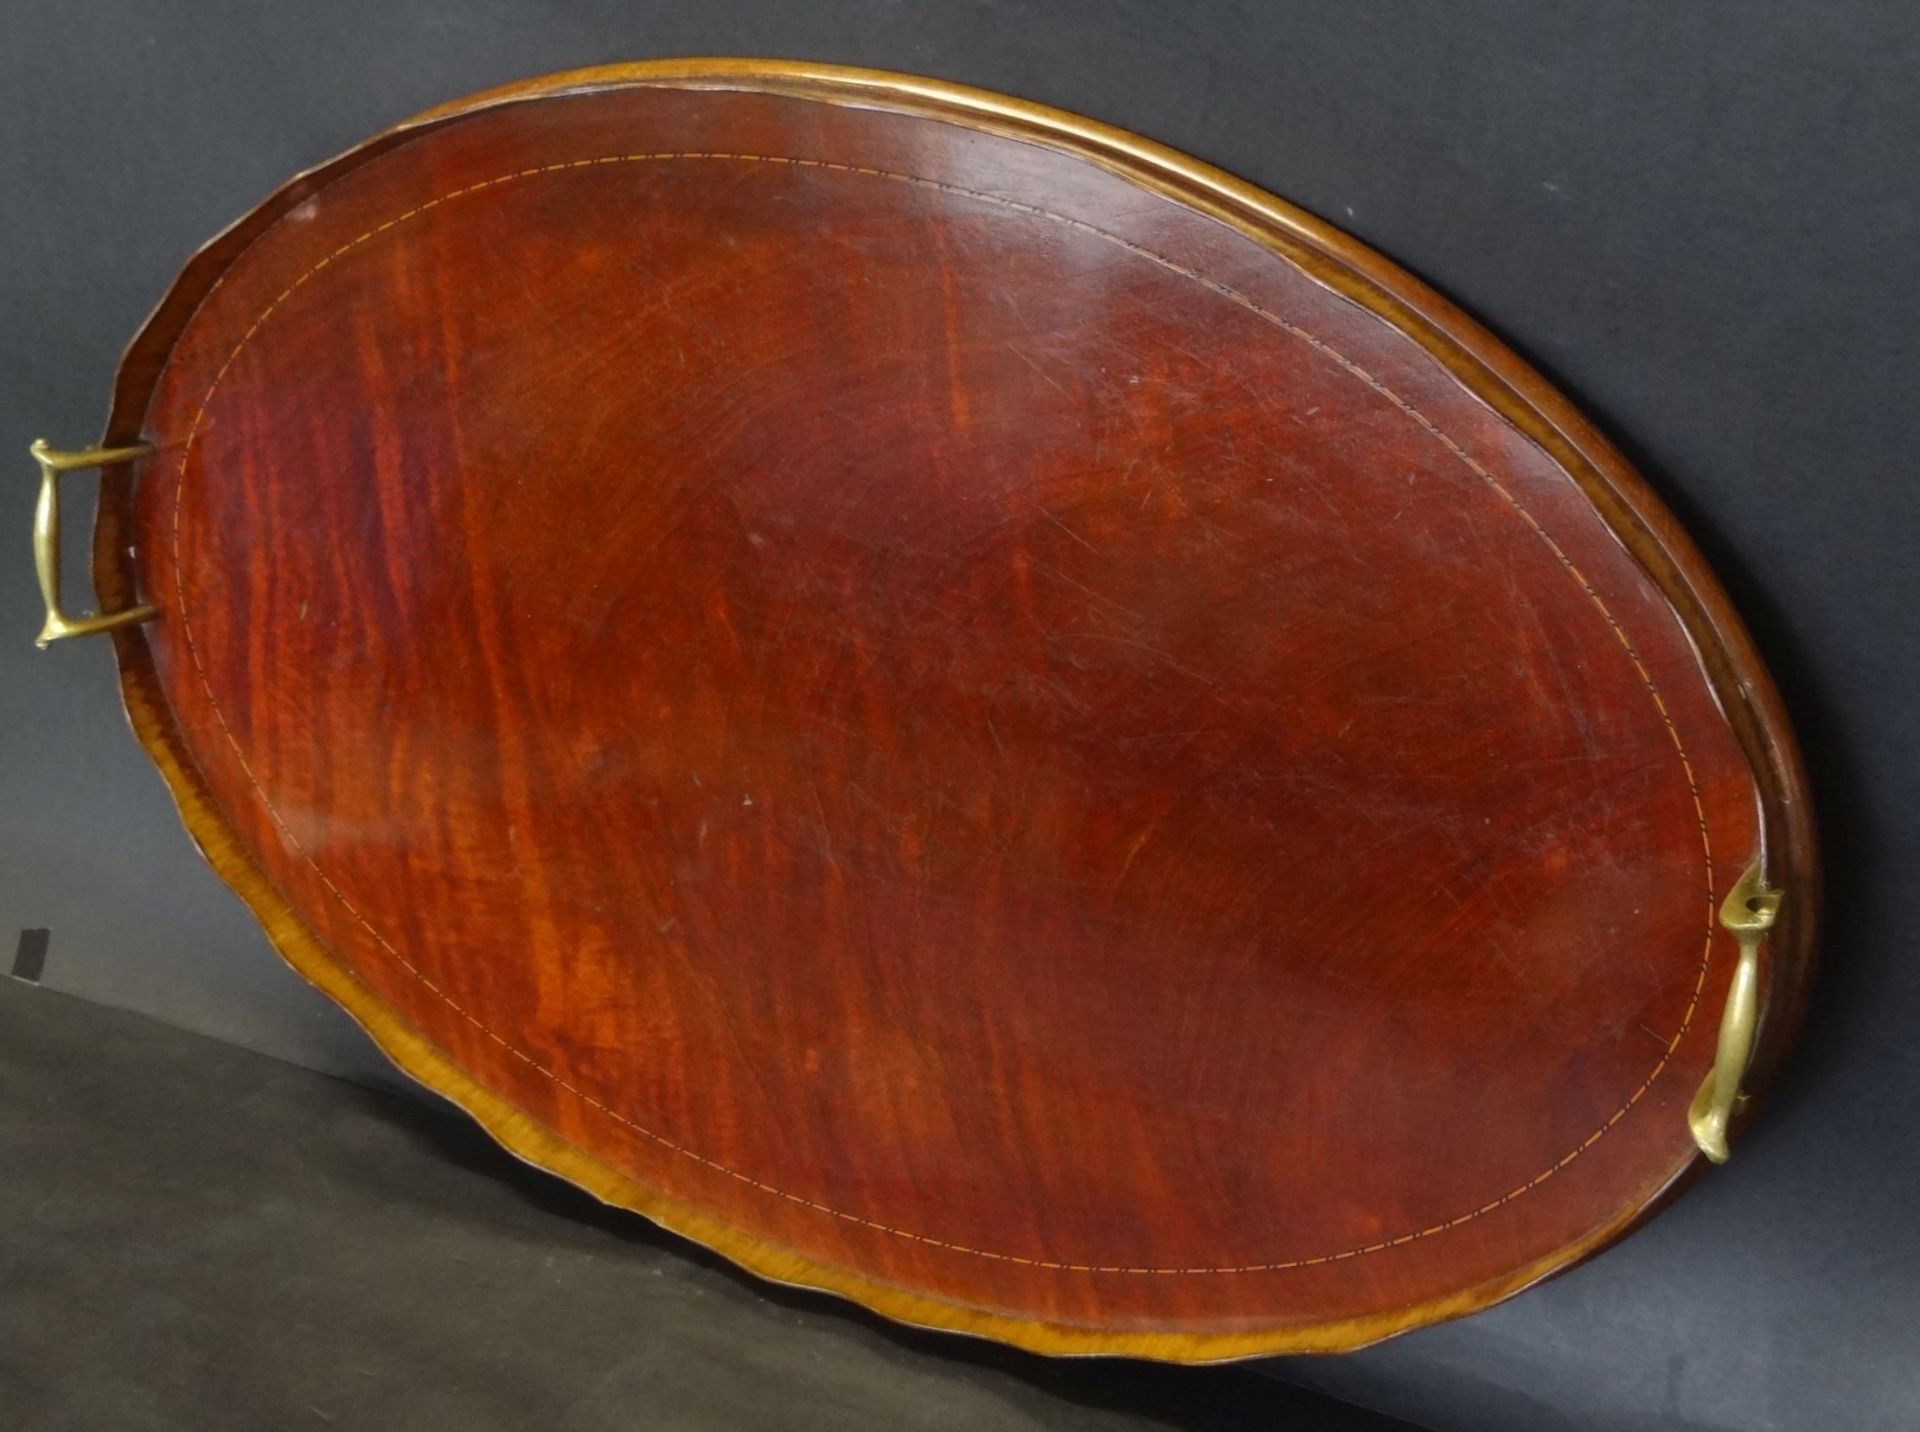 grosses ovales Holz-Galerietablett mit Messinggriffen, guter Zustand, 67x43 cm